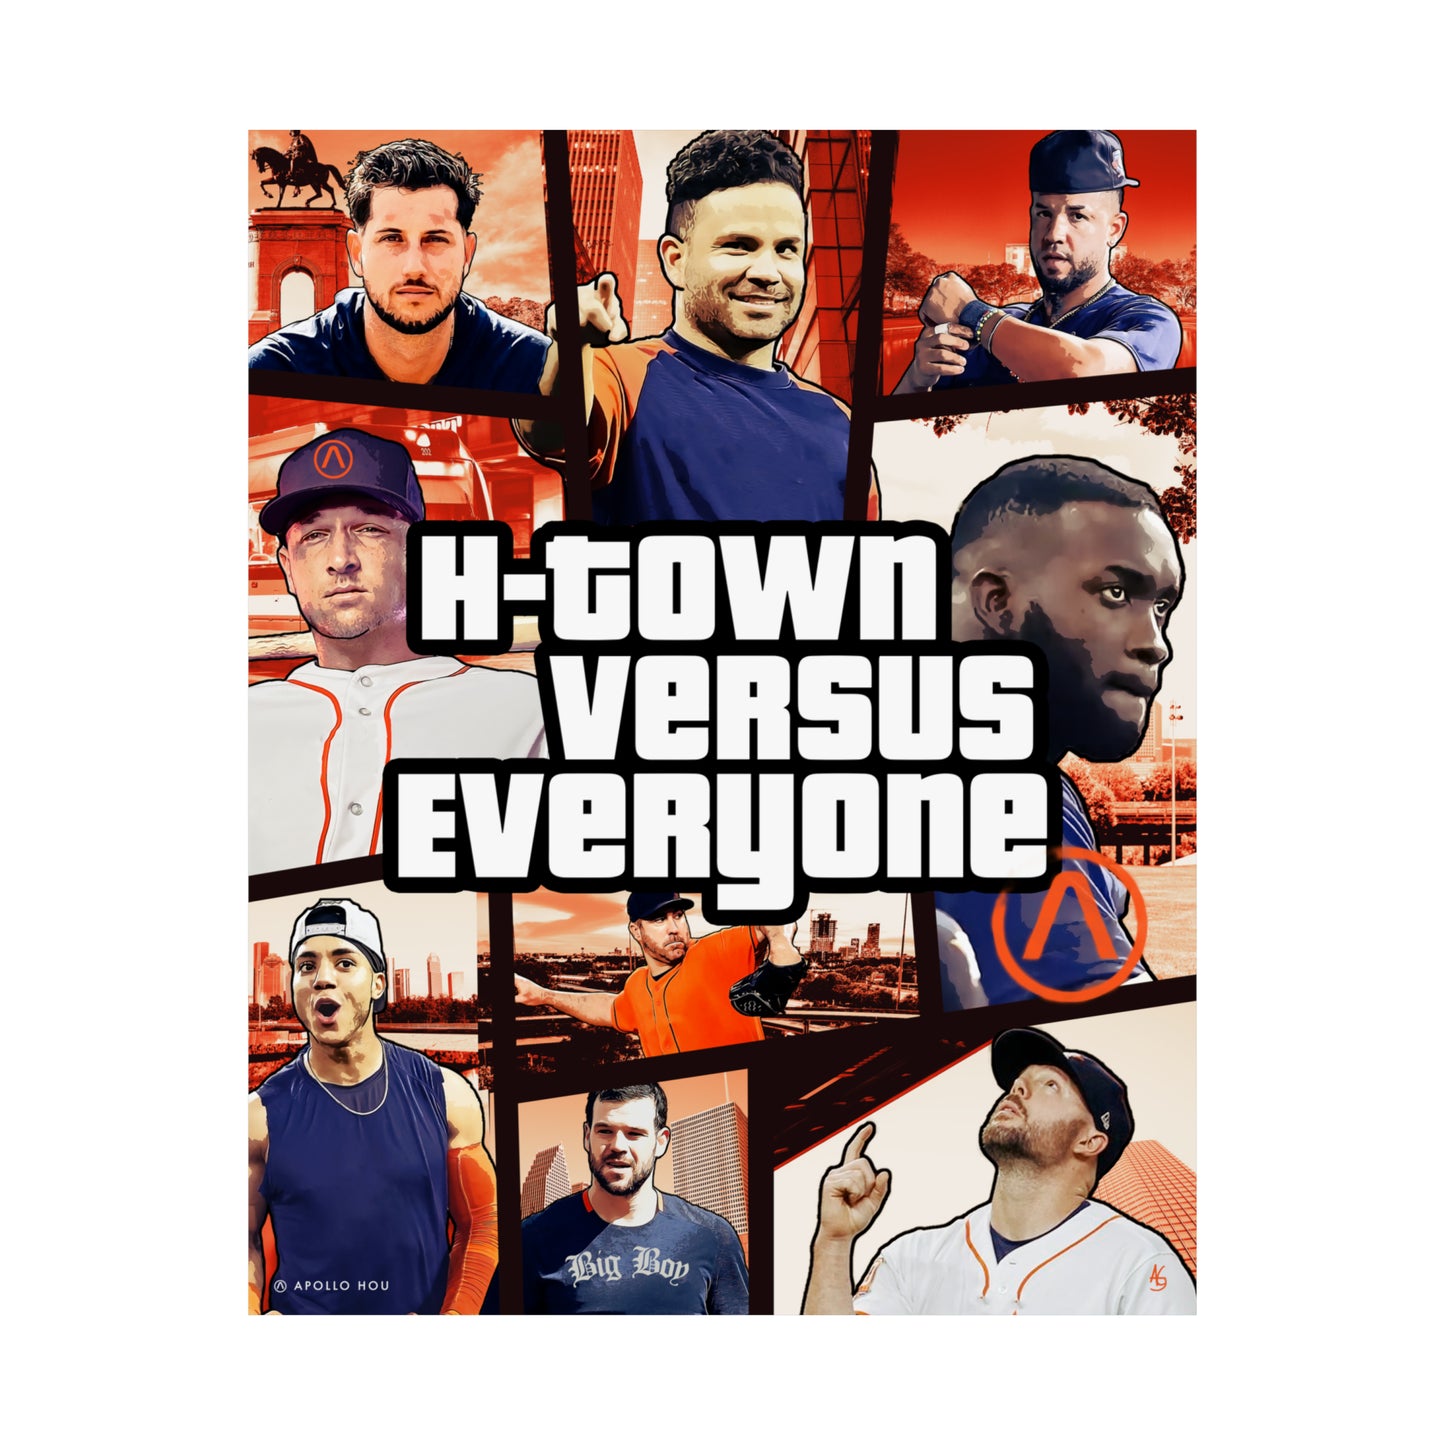 Htown GTA (Baseball) - Premium Matte Vertical Print